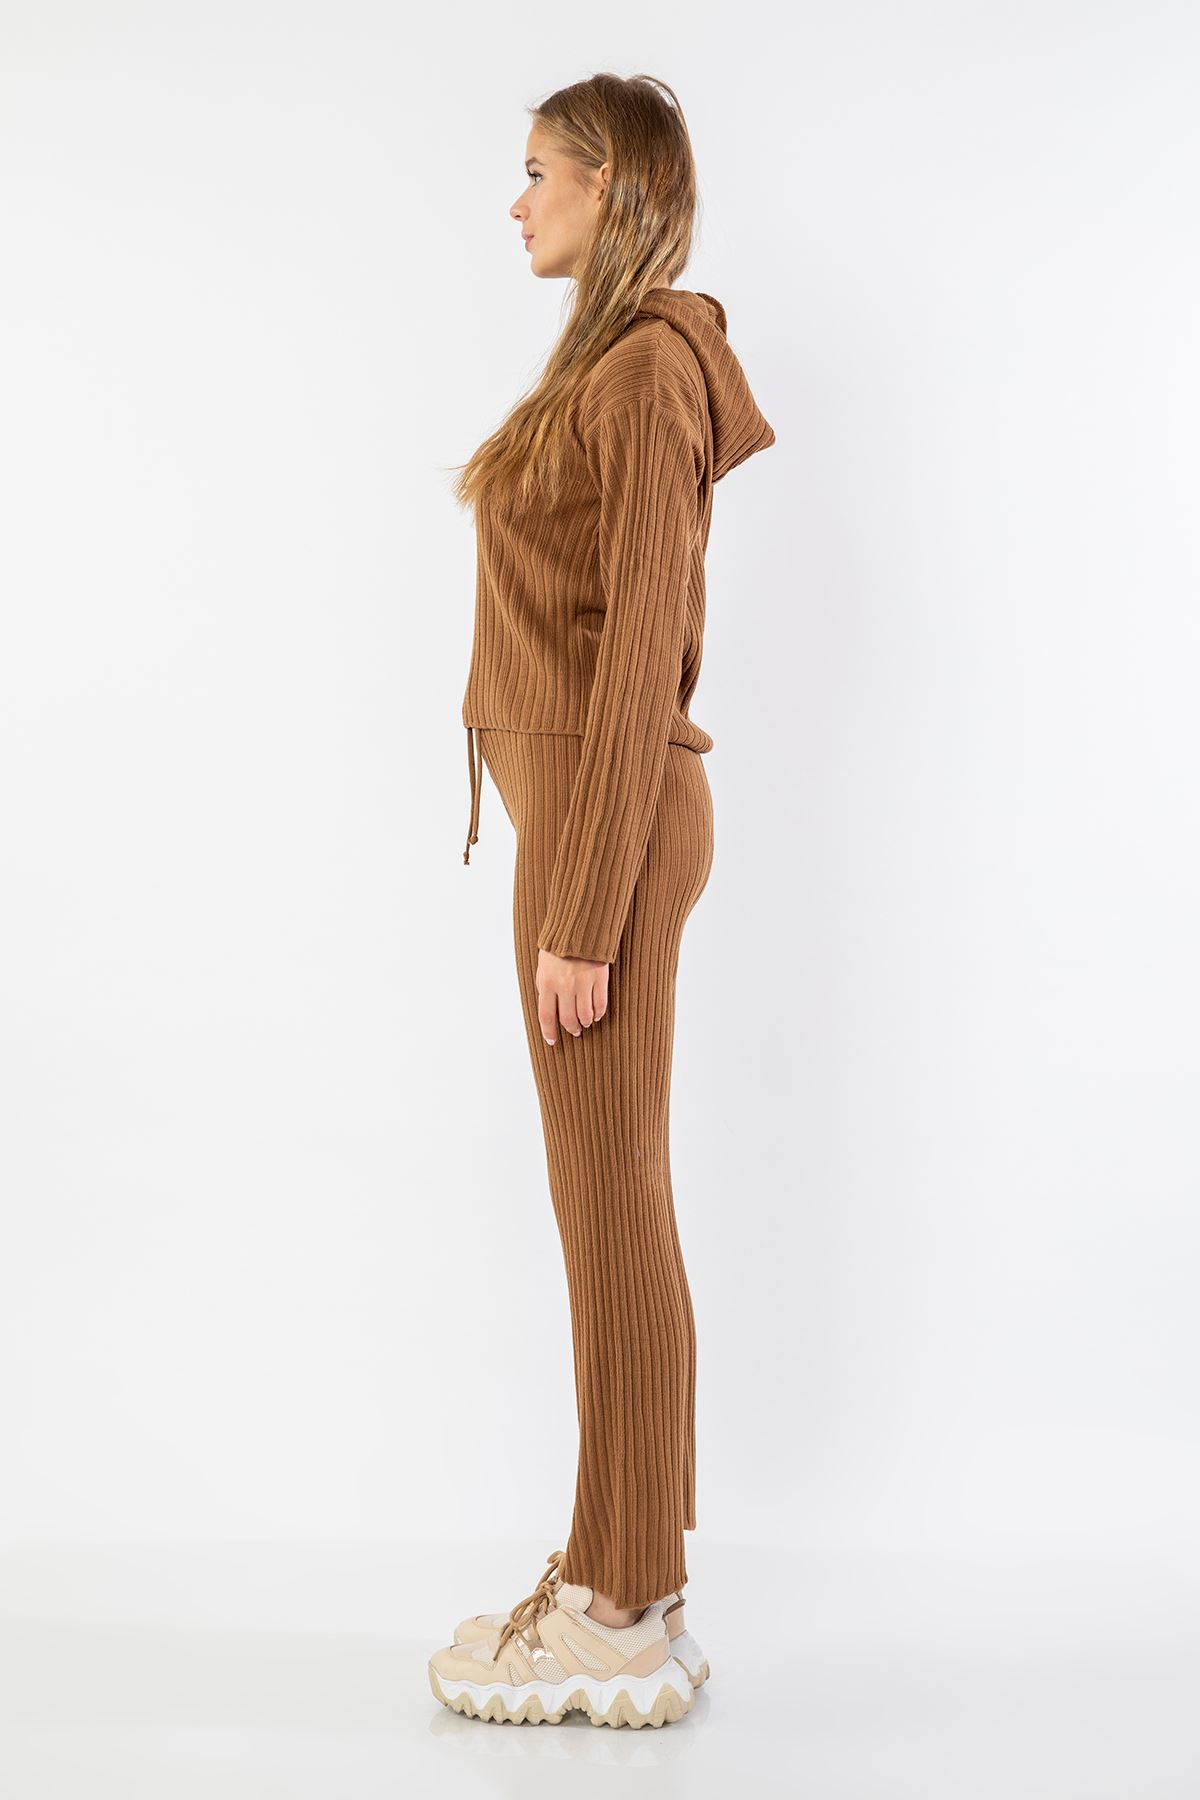 Knitwear Fabric Long Sleeve Hooded Women'S Set 2 Pieces - Brown